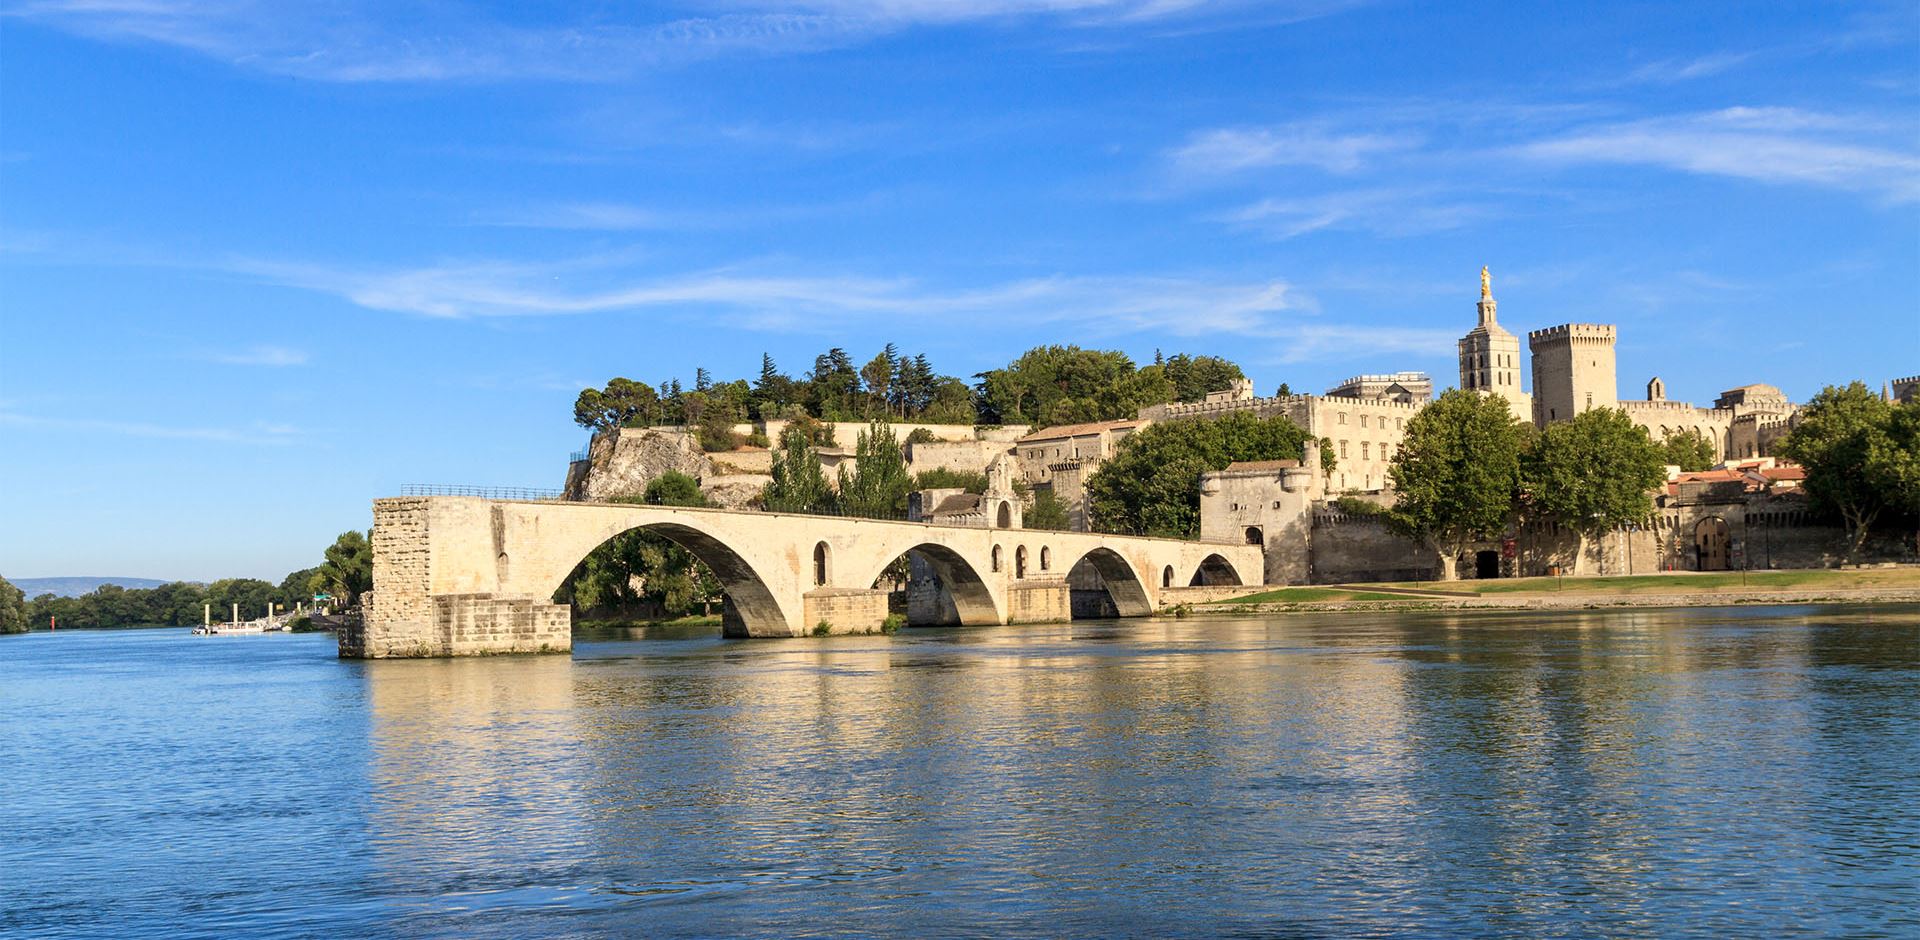 St Benezet Bridge reflected on the Rhône River, France  